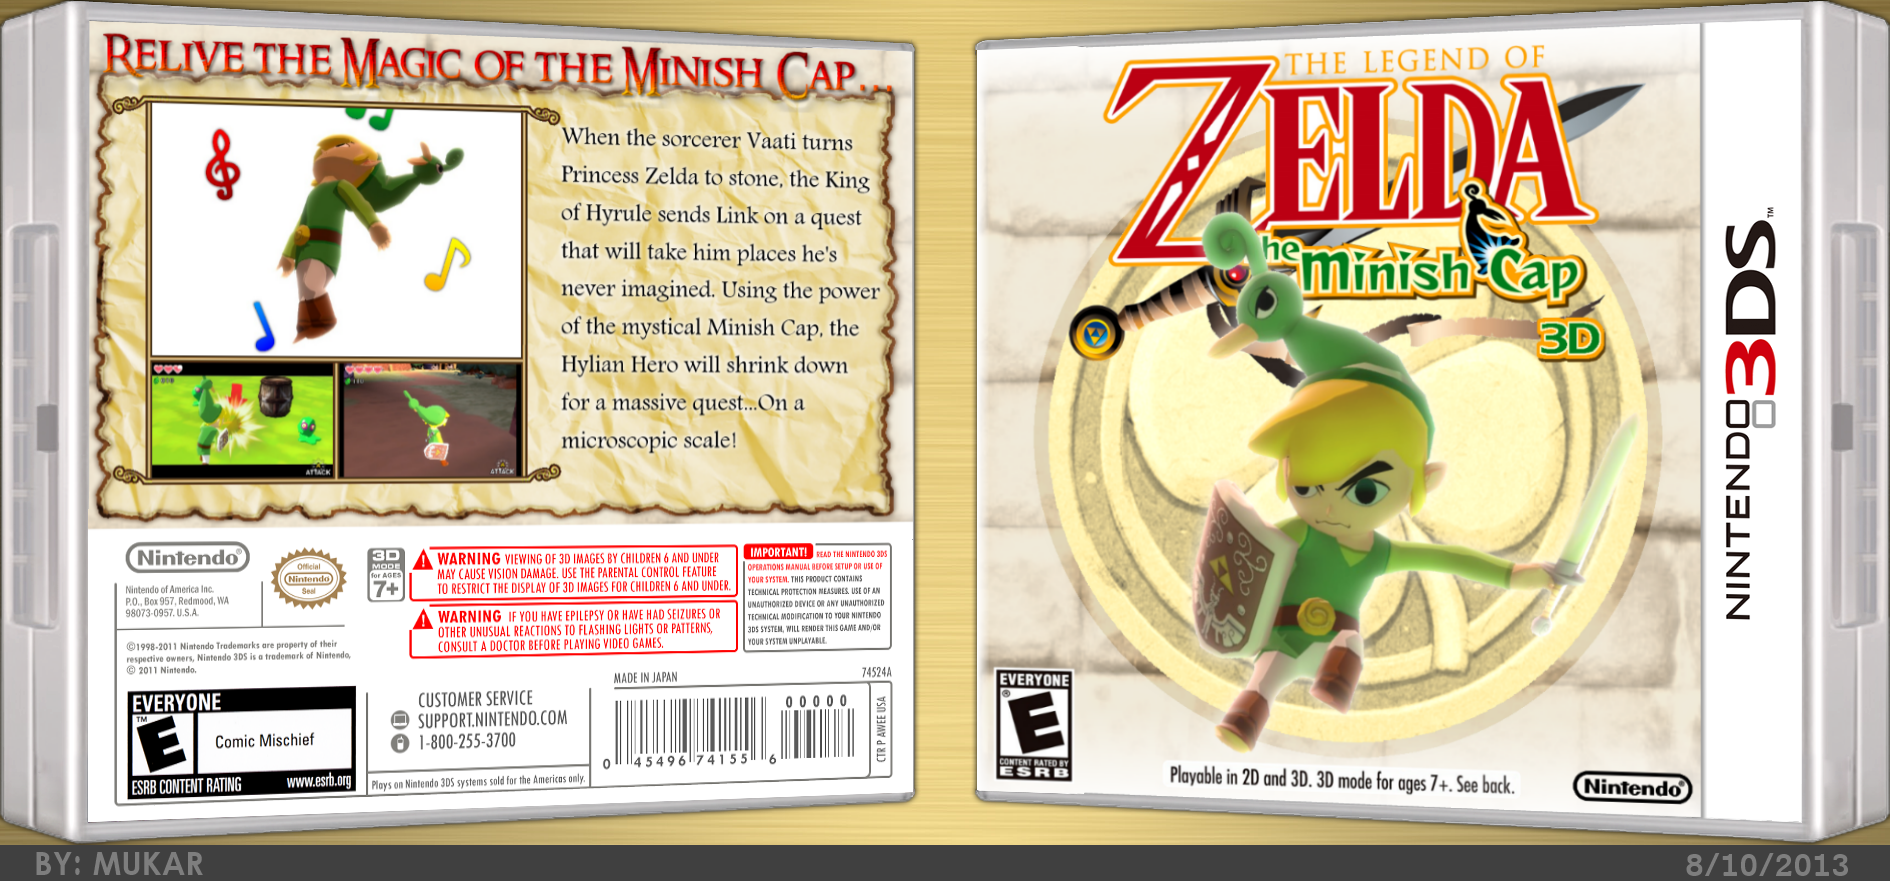 The Zelda: The Minish Cap 3D box cover